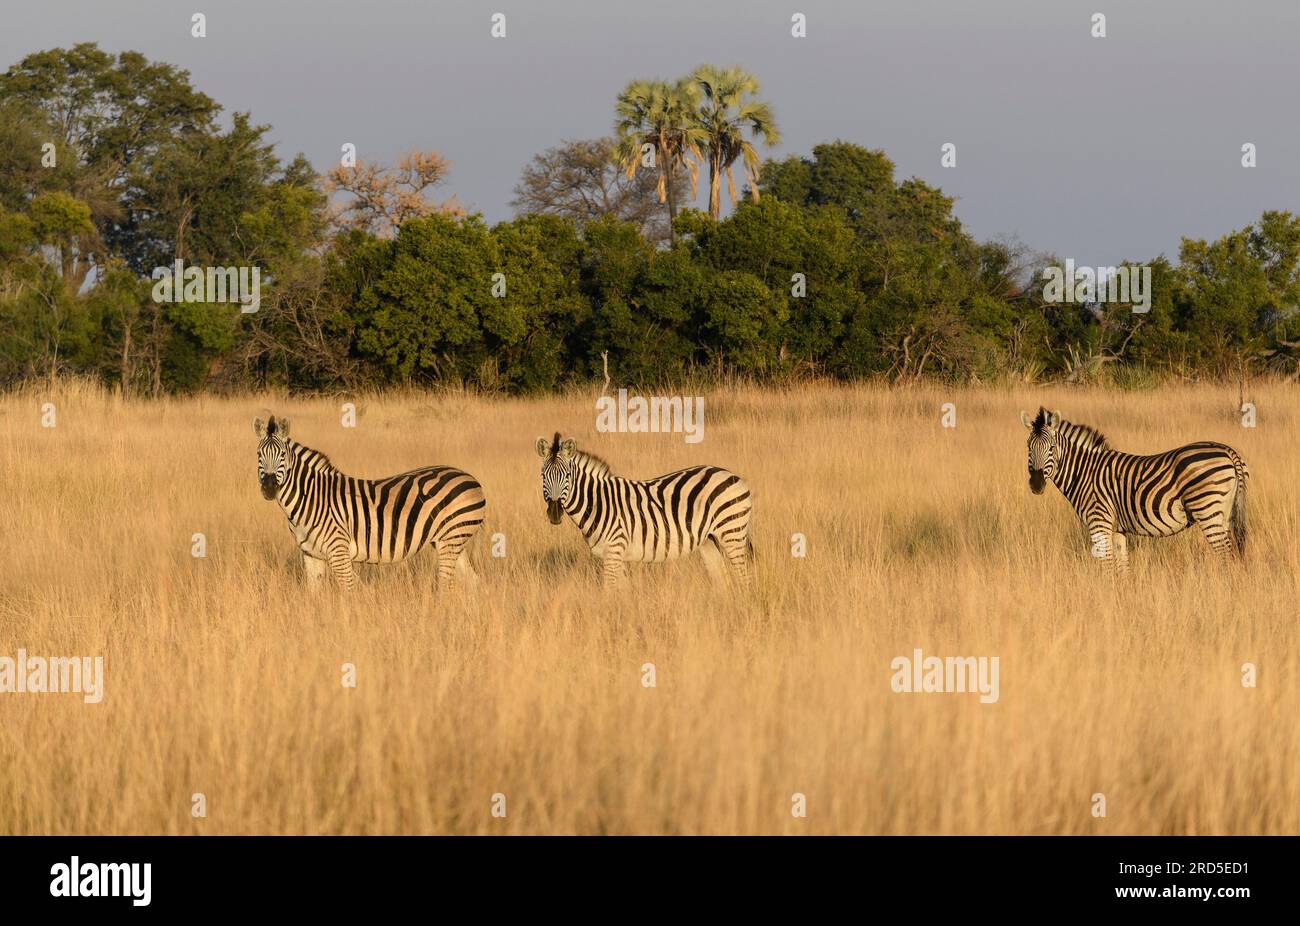 Three zebras on the grasslands in golden light Stock Photo